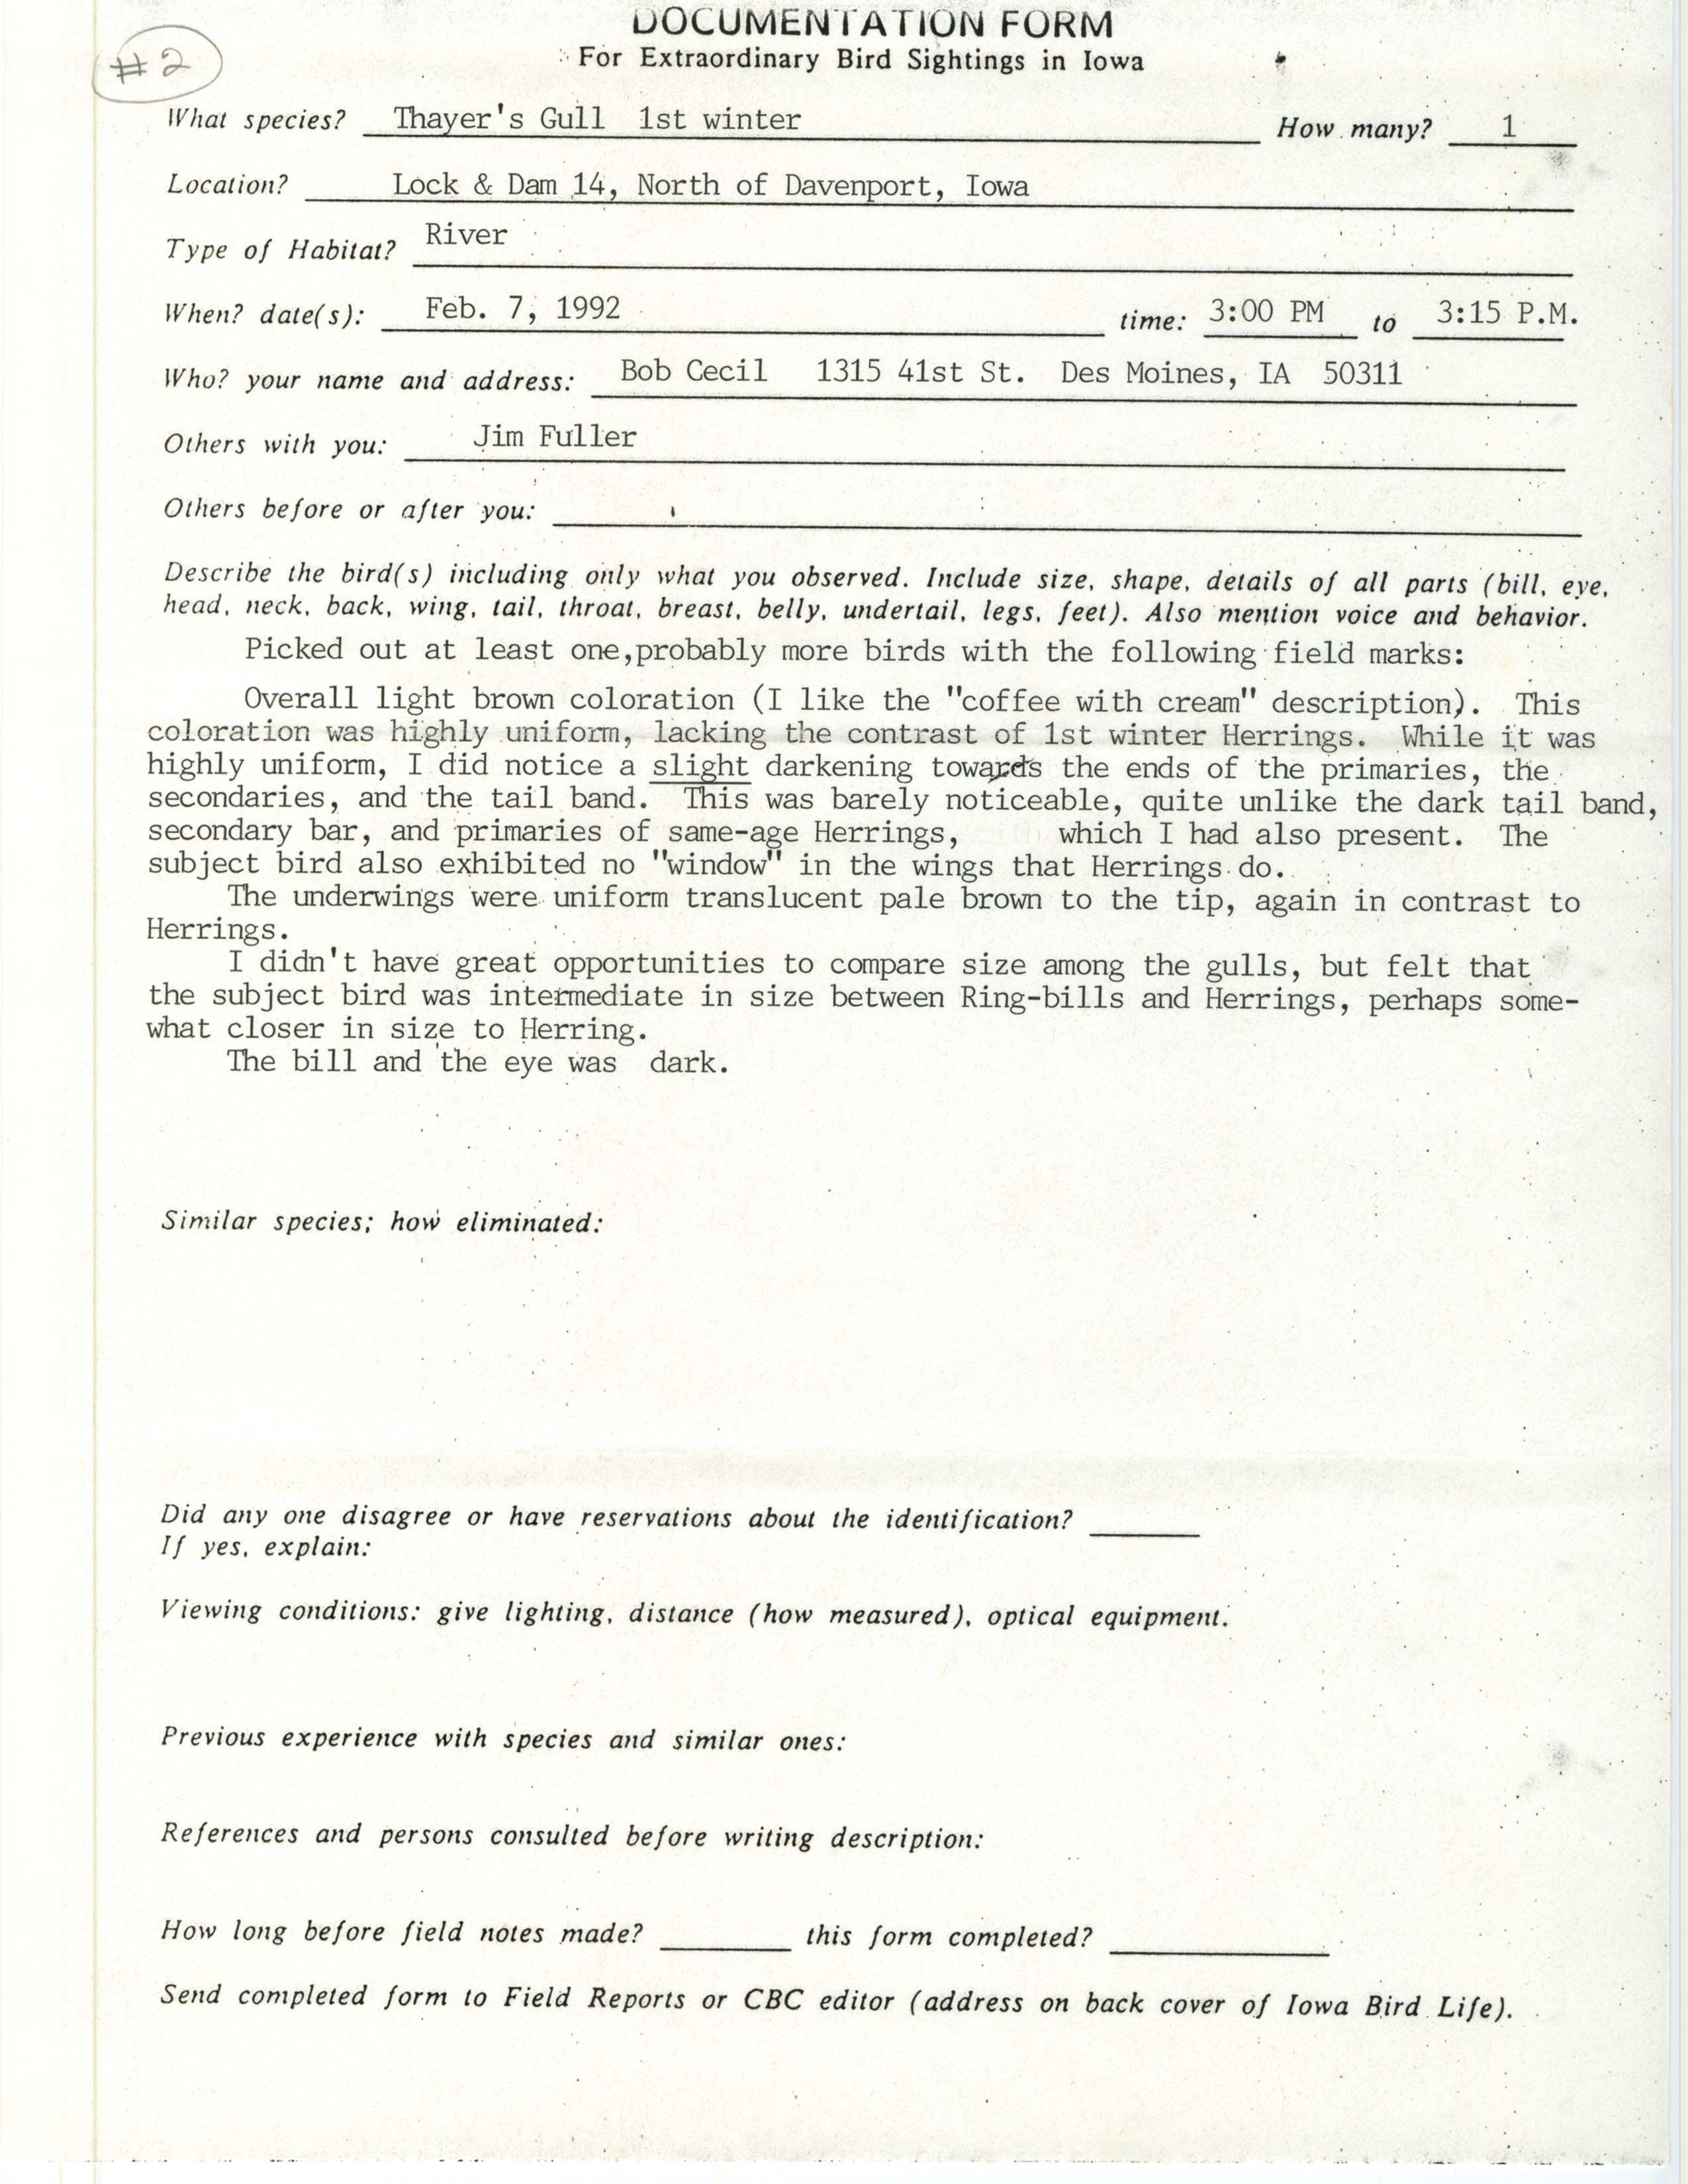 Documentation form for extraordinary bird sightings in Iowa, Thayer's Gull, February 7, 1992 